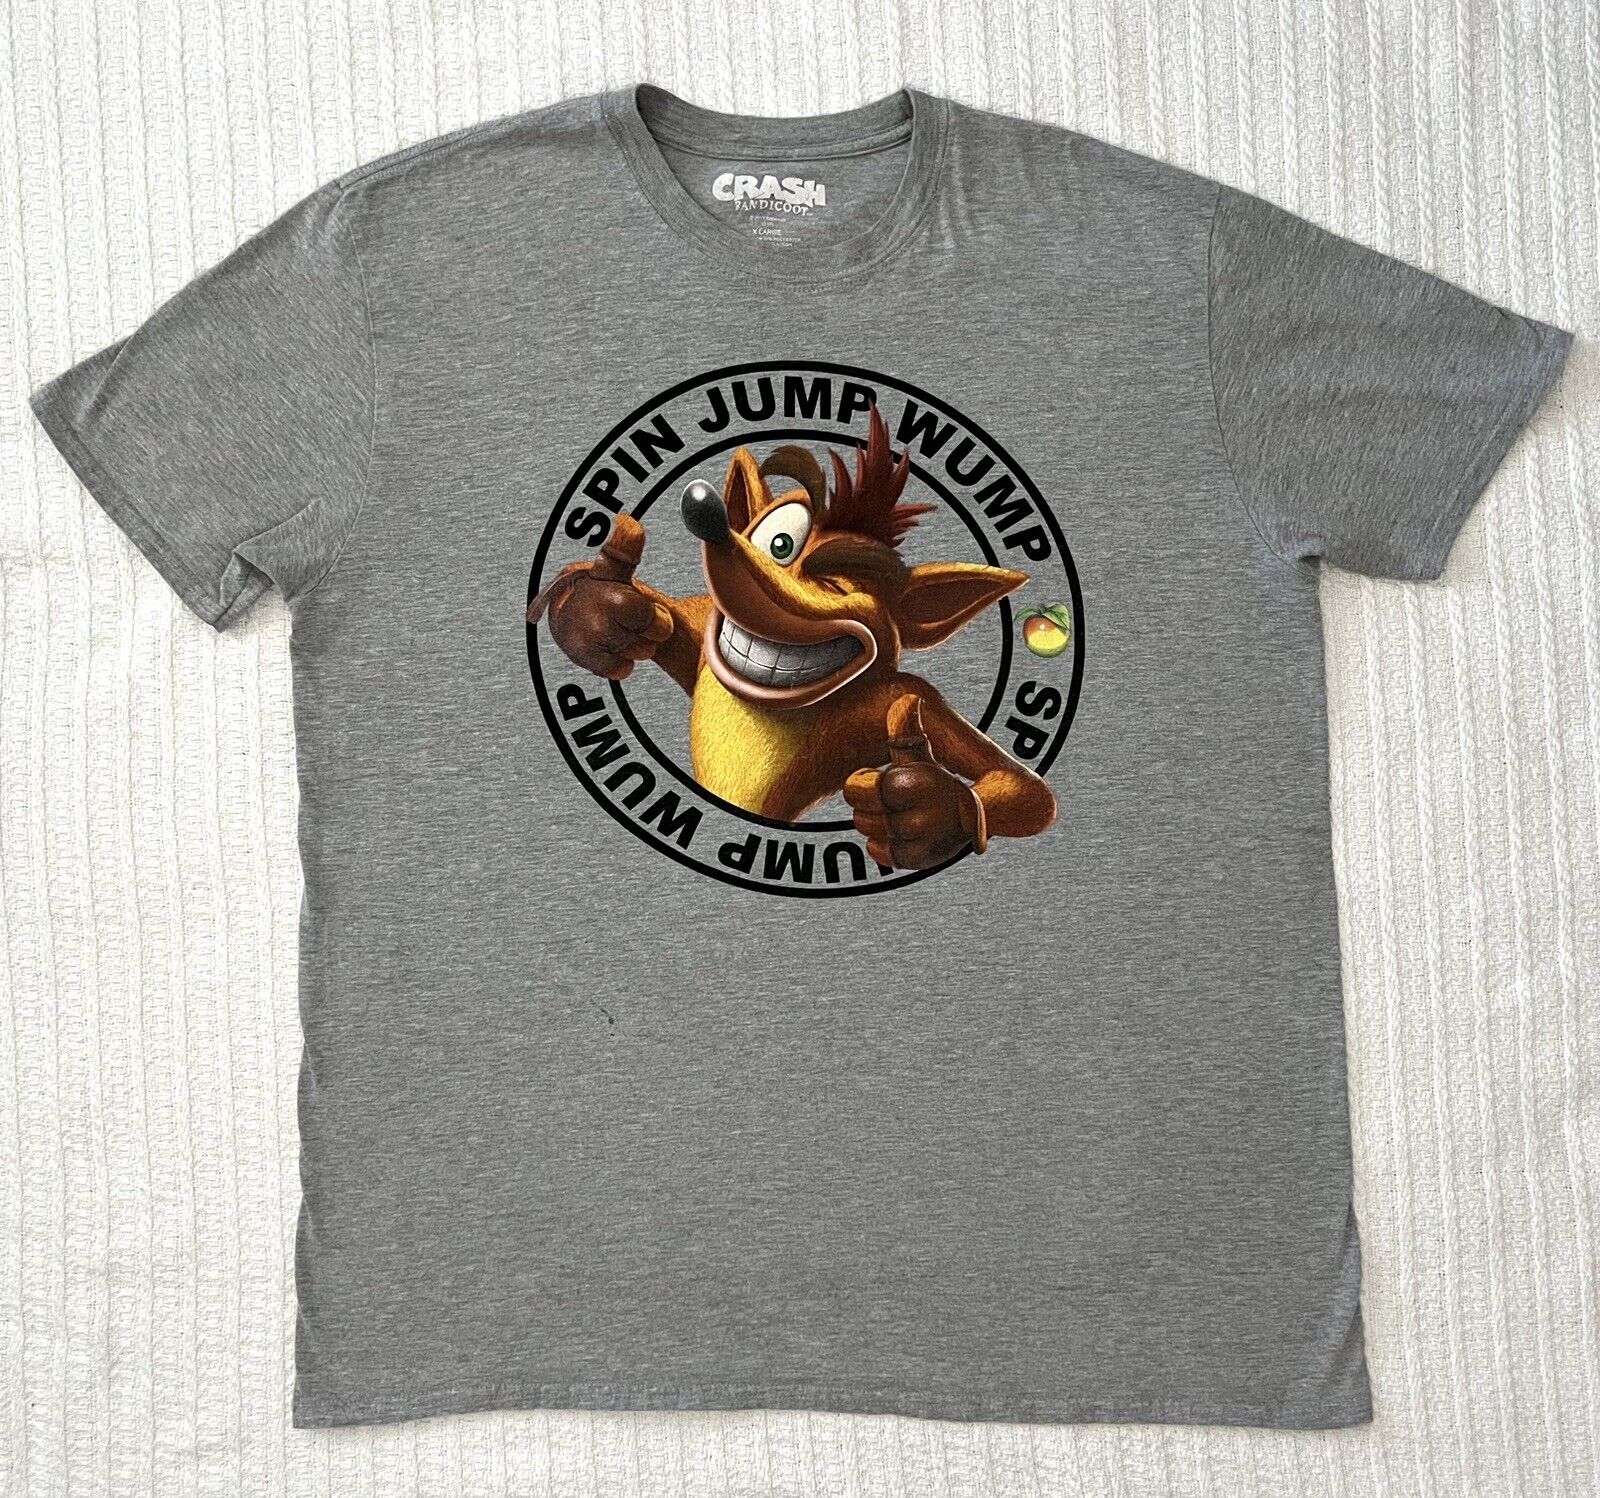 Crash Bandicoot “Spin Jump Wump”  T-shirt Size XL 22.5” X 28”